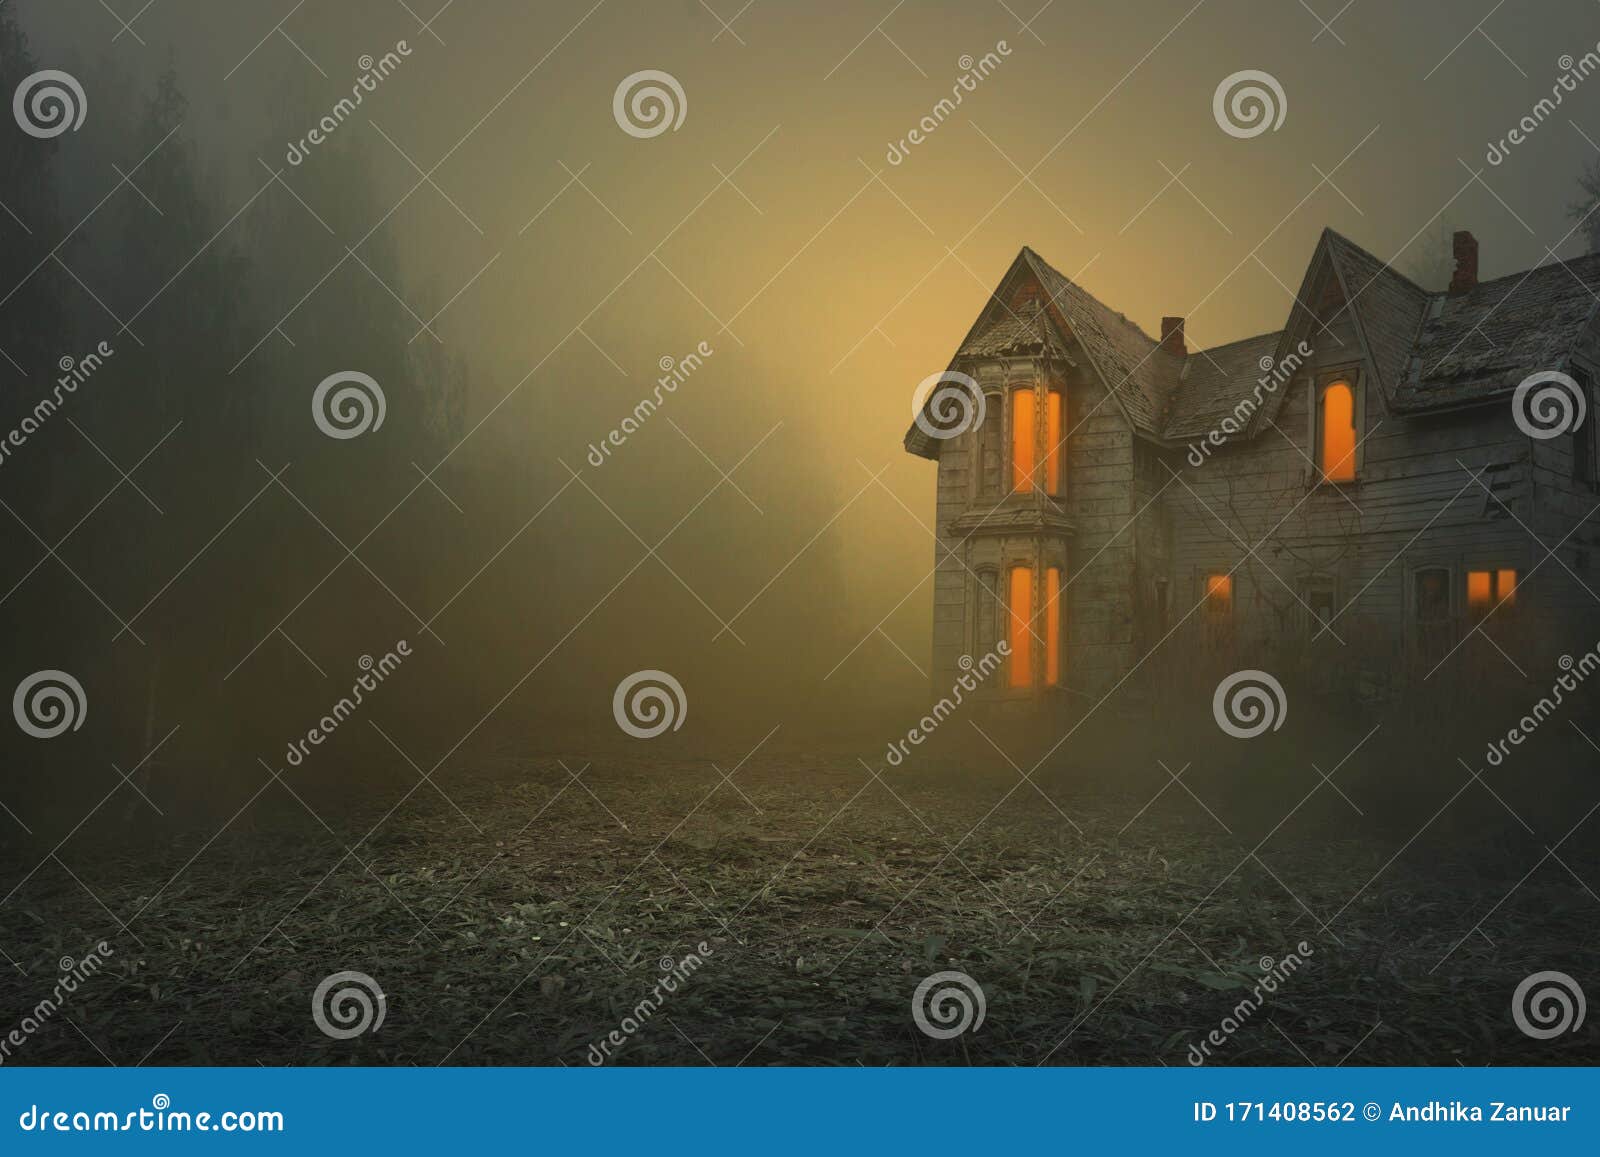 foggy and creepy old house